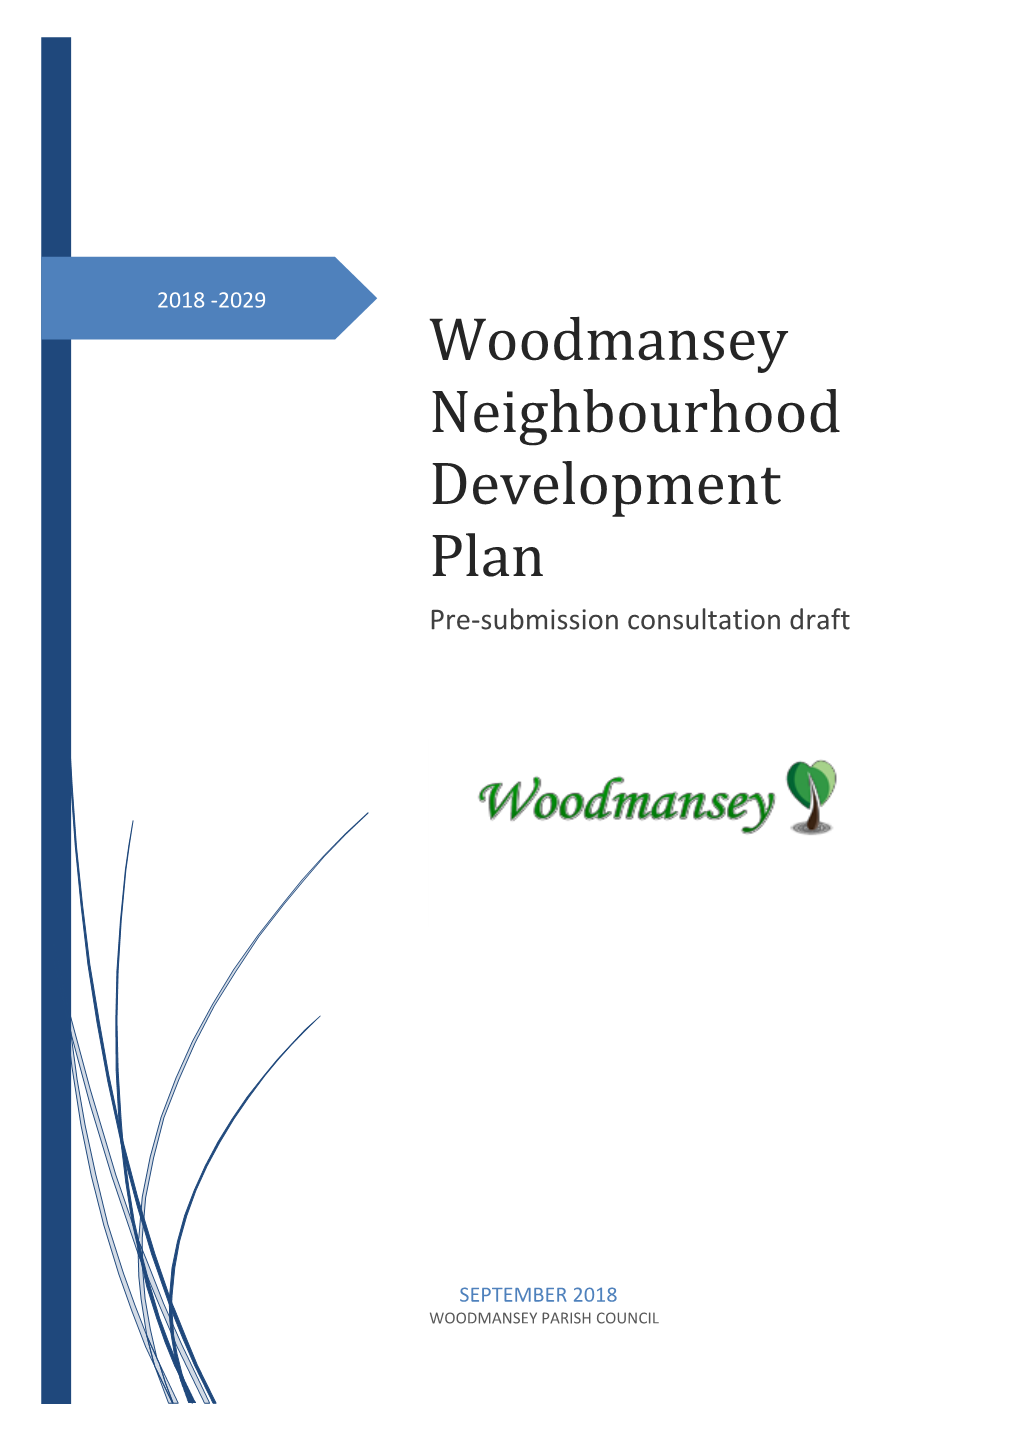 Woodmansey Neighbourhood Development Plan Pre-Submission Consultation Draft